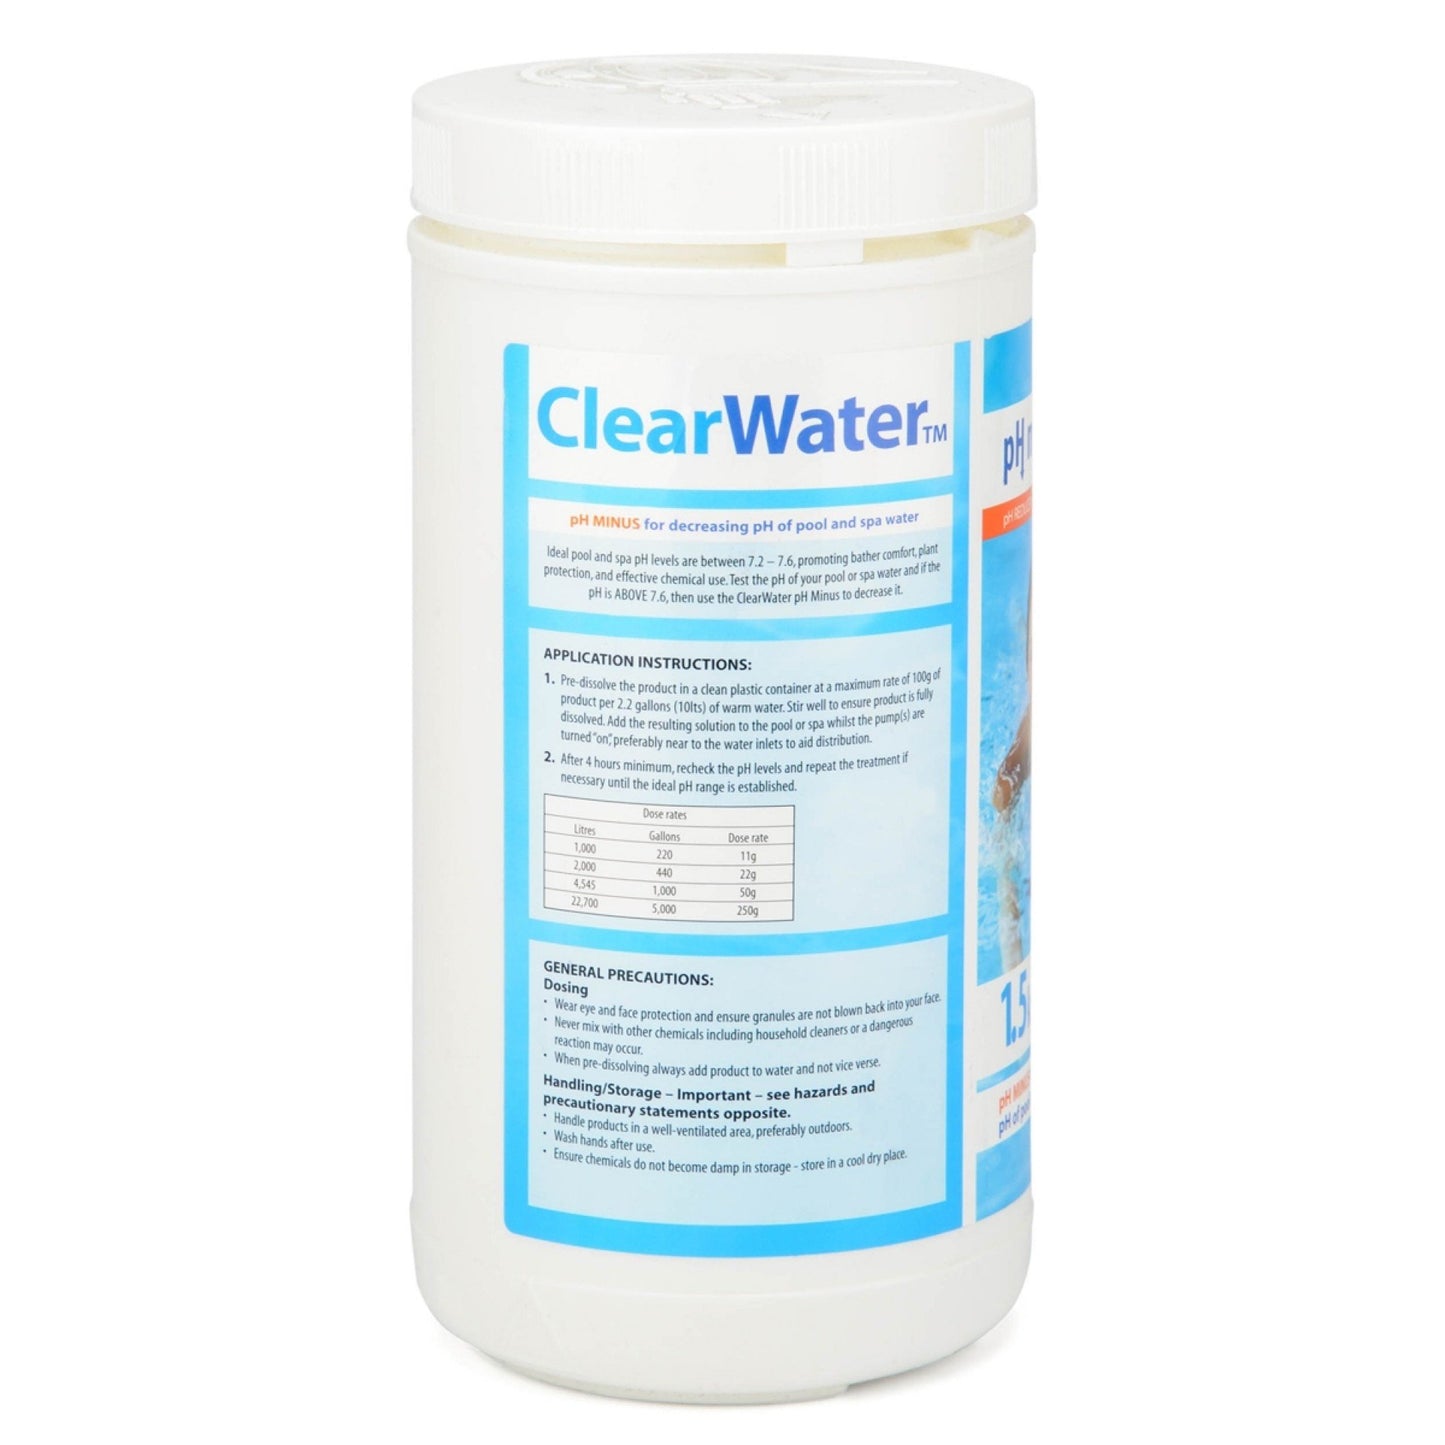 Clearwater PH Minus (1.5kg)